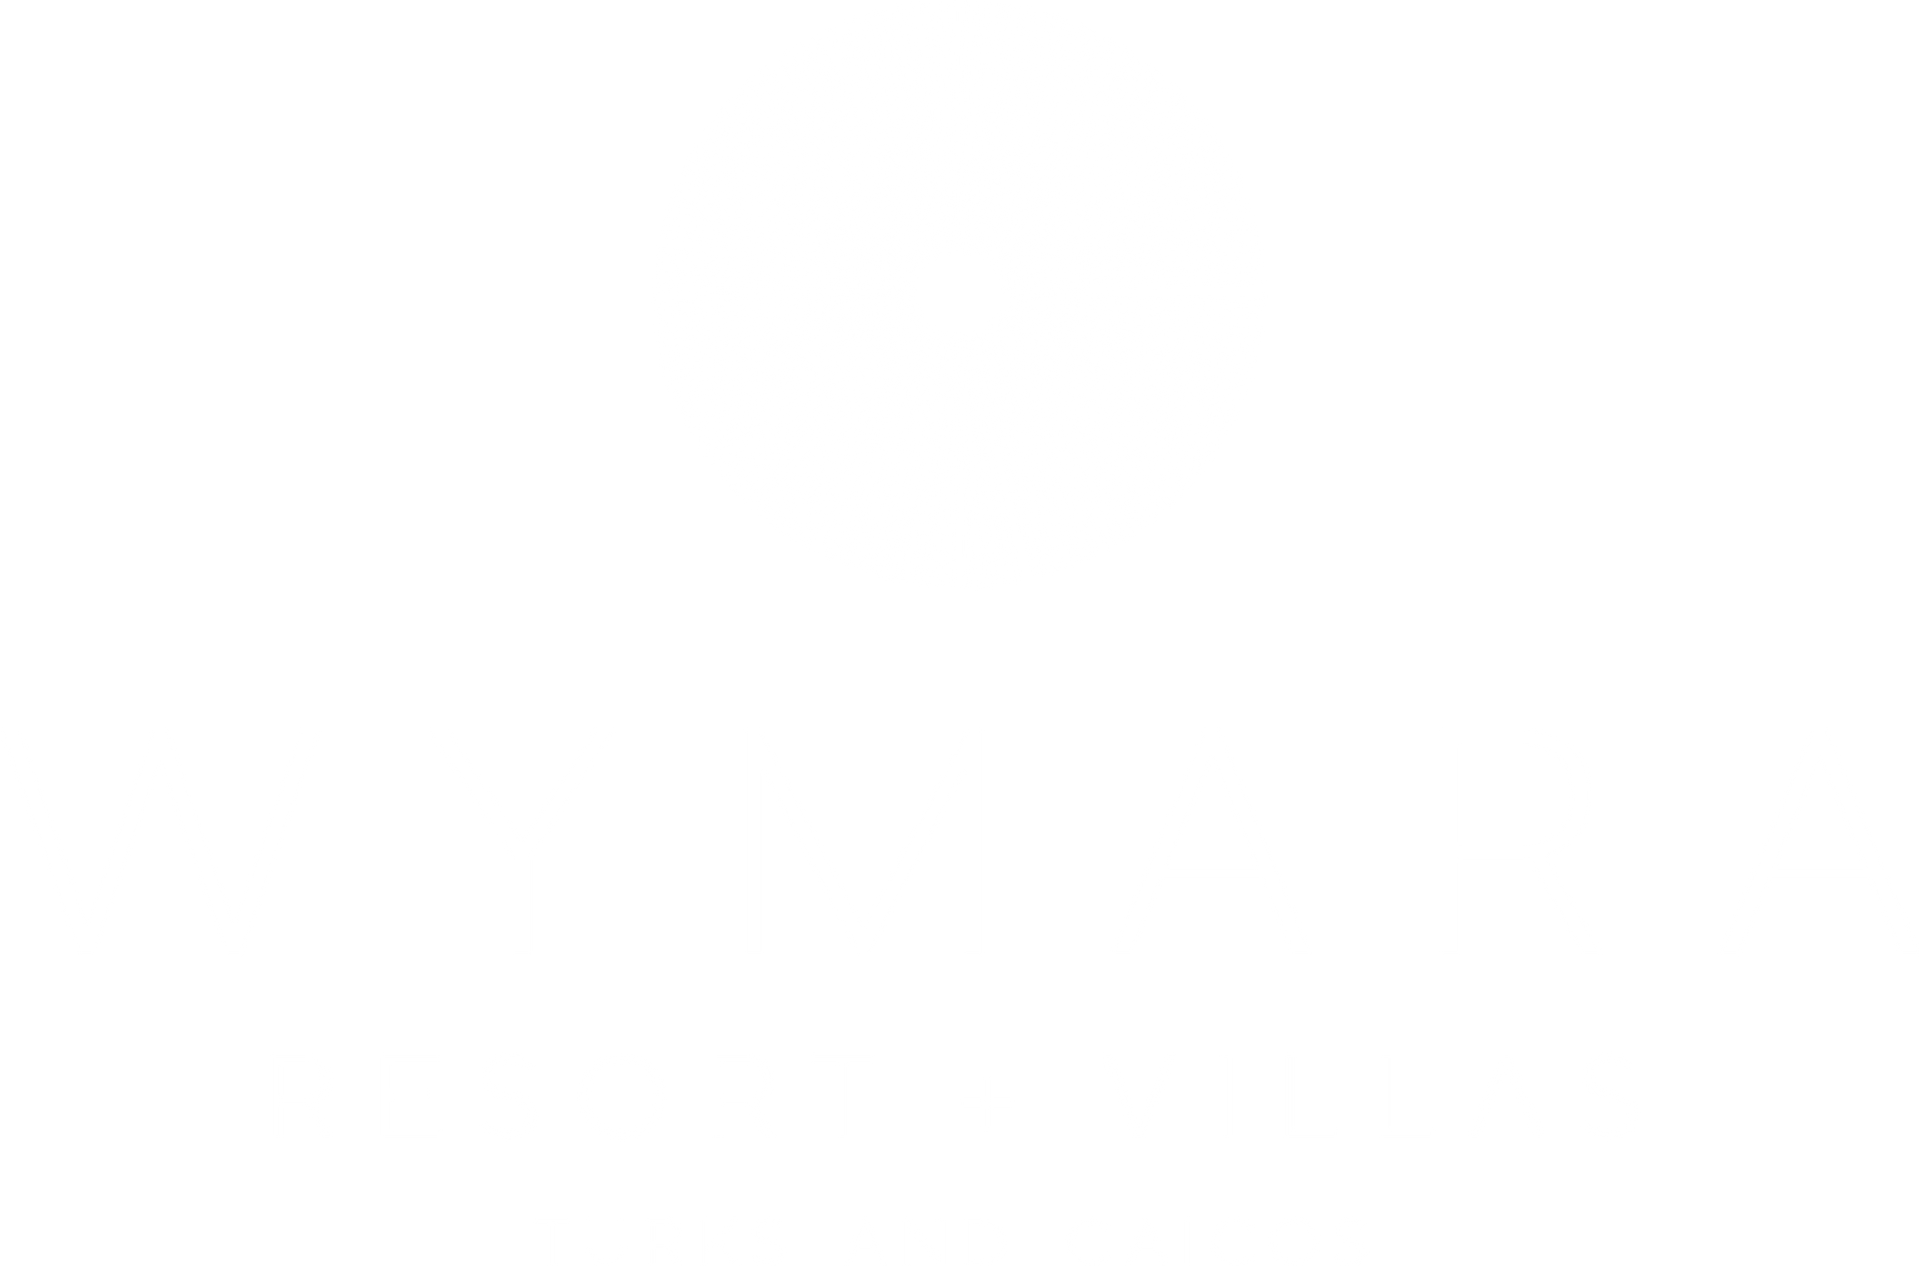 Wymara Resort + Villas, Turks and Caicos logo